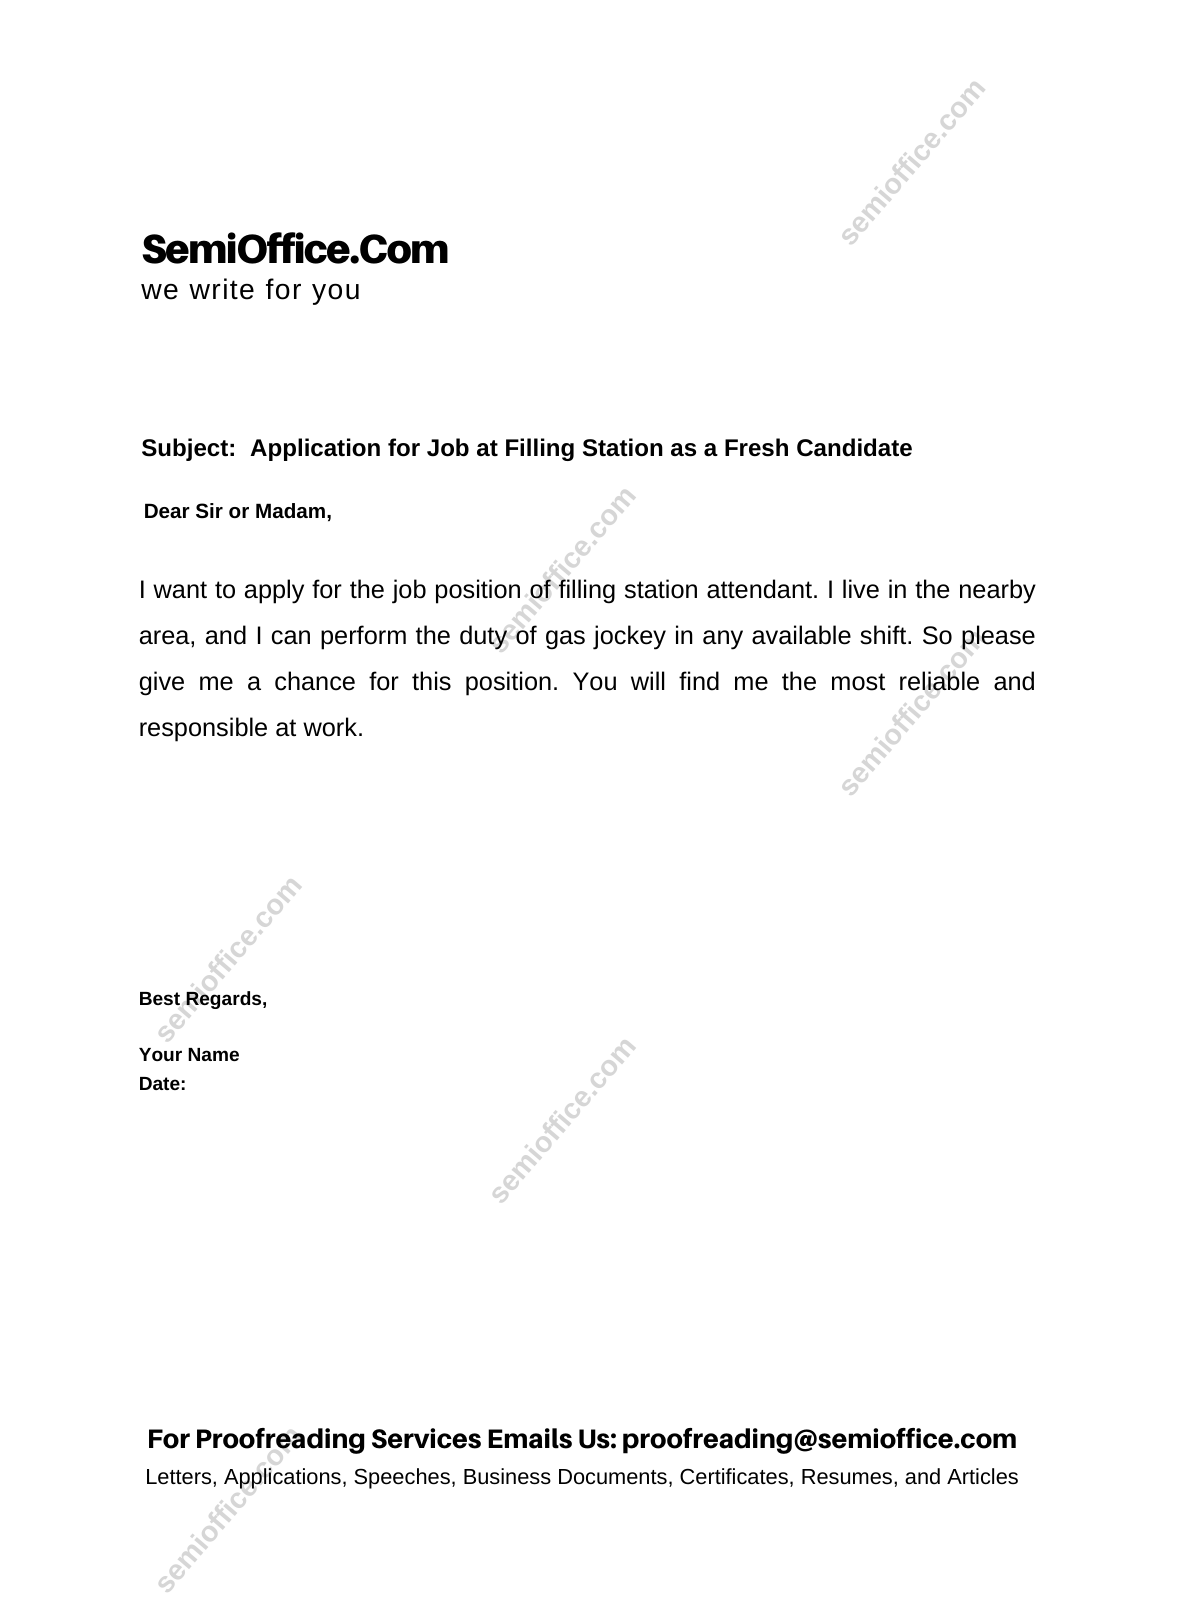 application letter for job in filling station